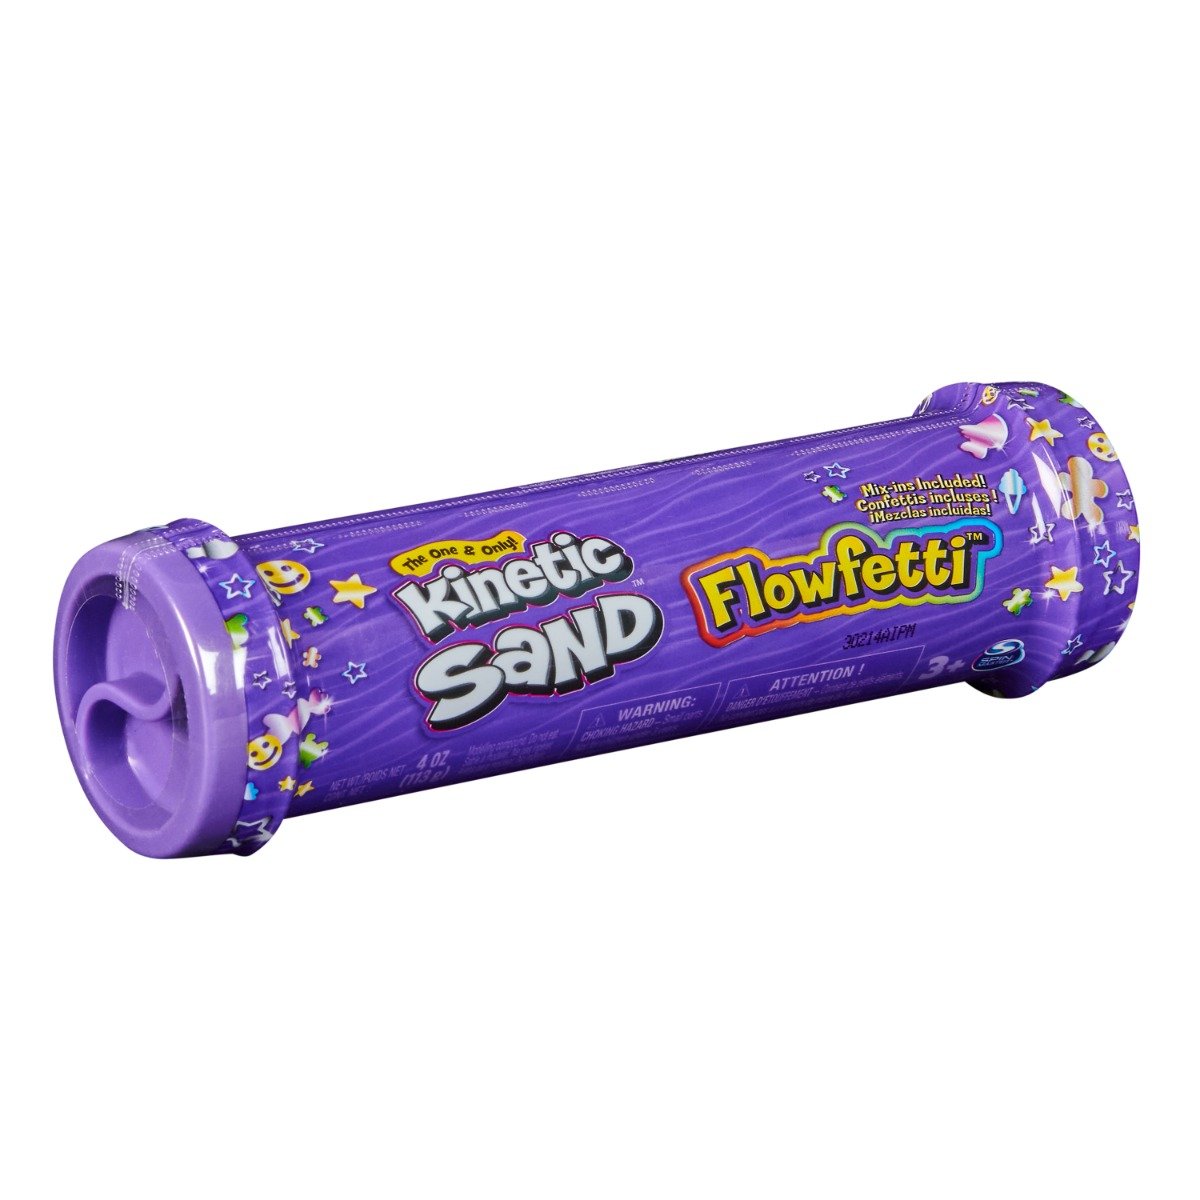 Nisip kinetic in tub, Kinetic Sand, Flowfetti, 20141538